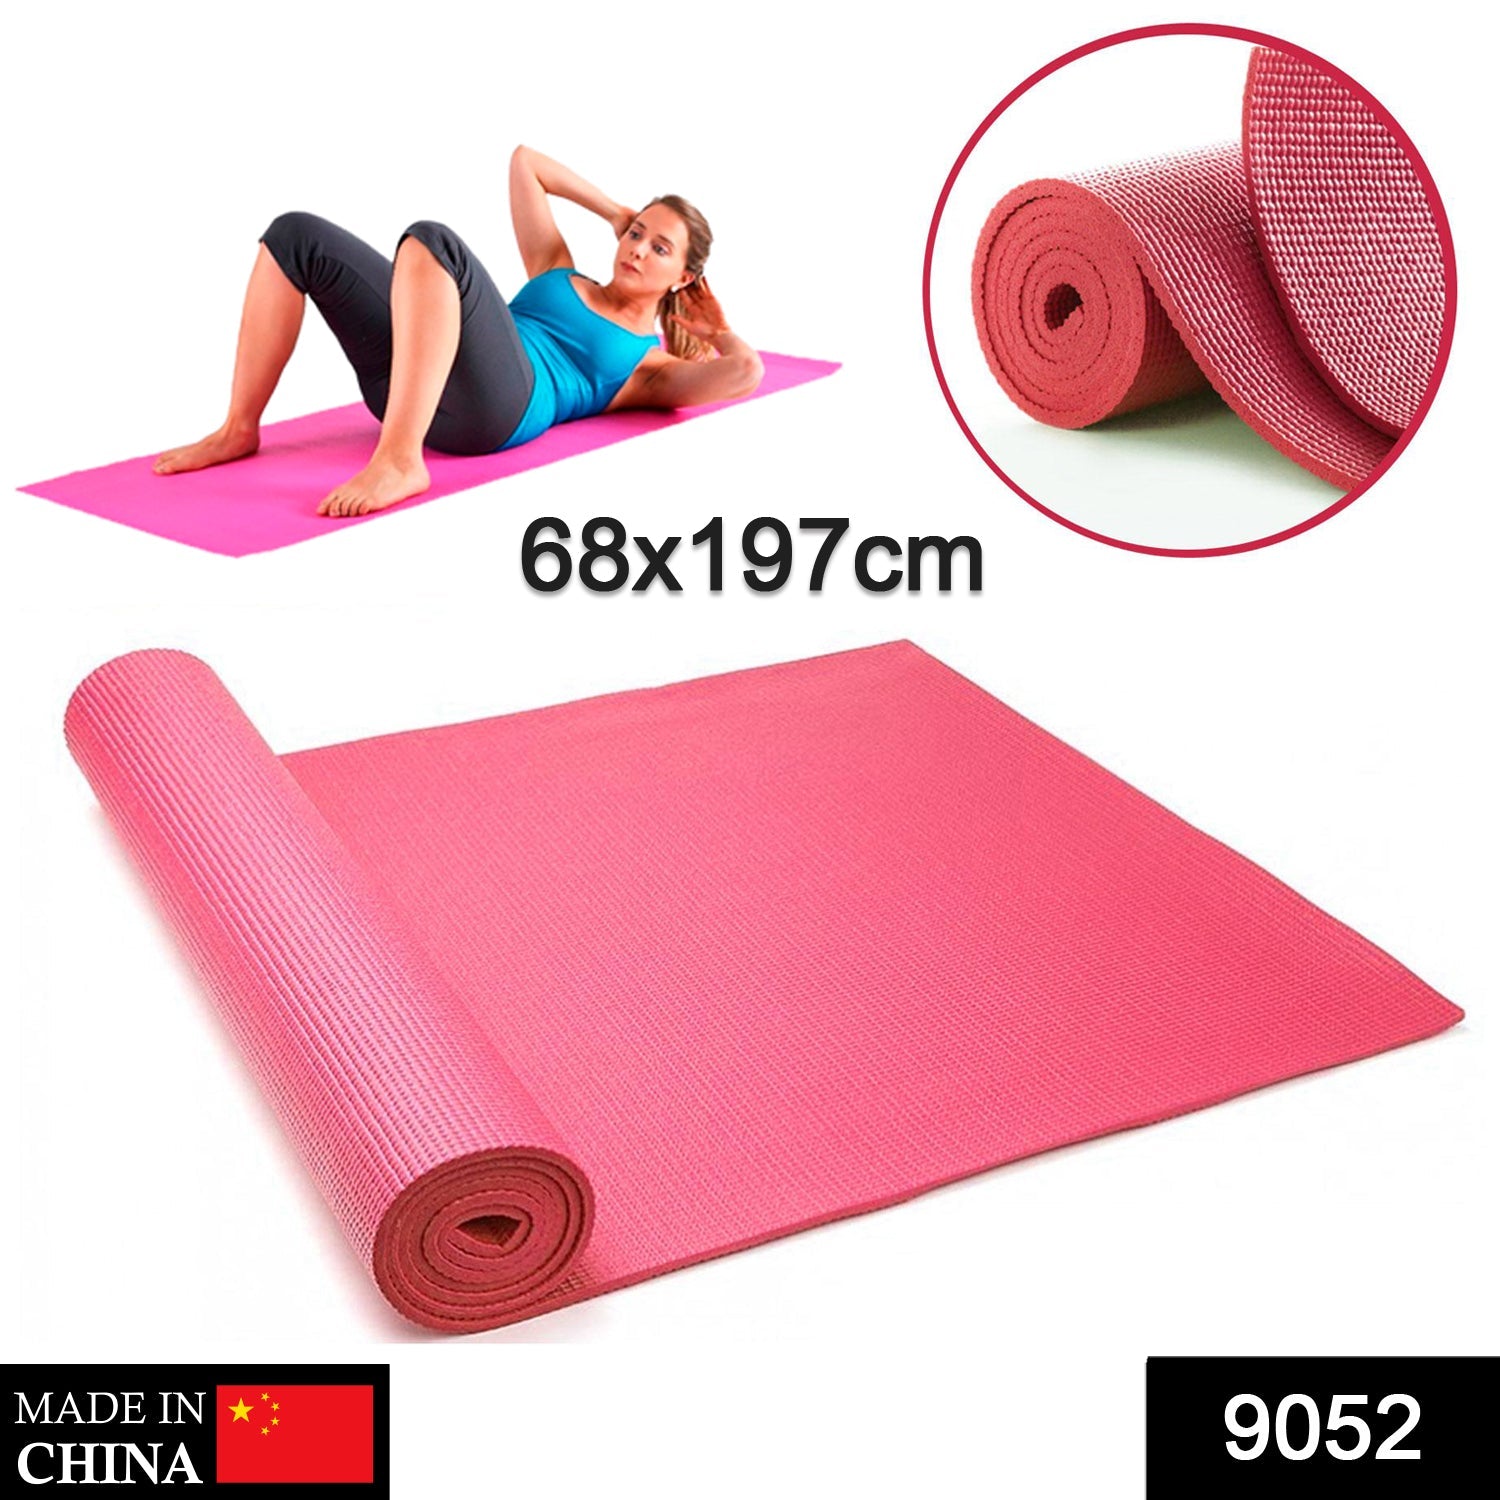 9052 YOGA MAT / Non-Skid Yoga Mat for Yoga for Yoga Aasan, Exercise or Meditation for men & women. DeoDap